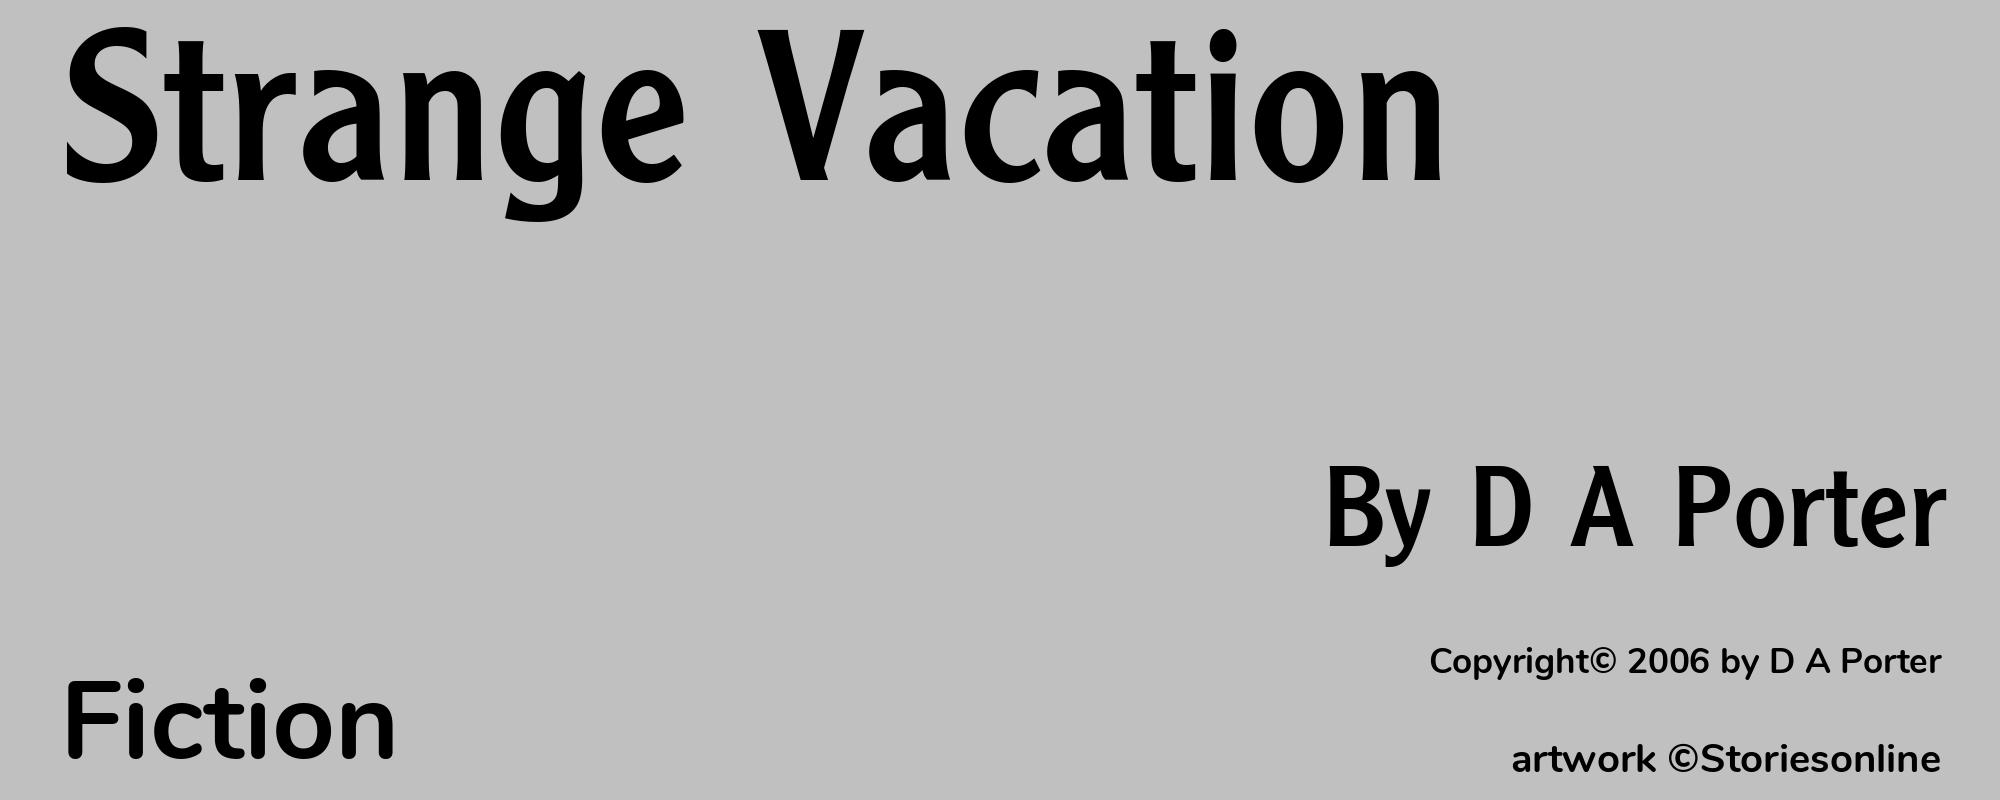 Strange Vacation - Cover